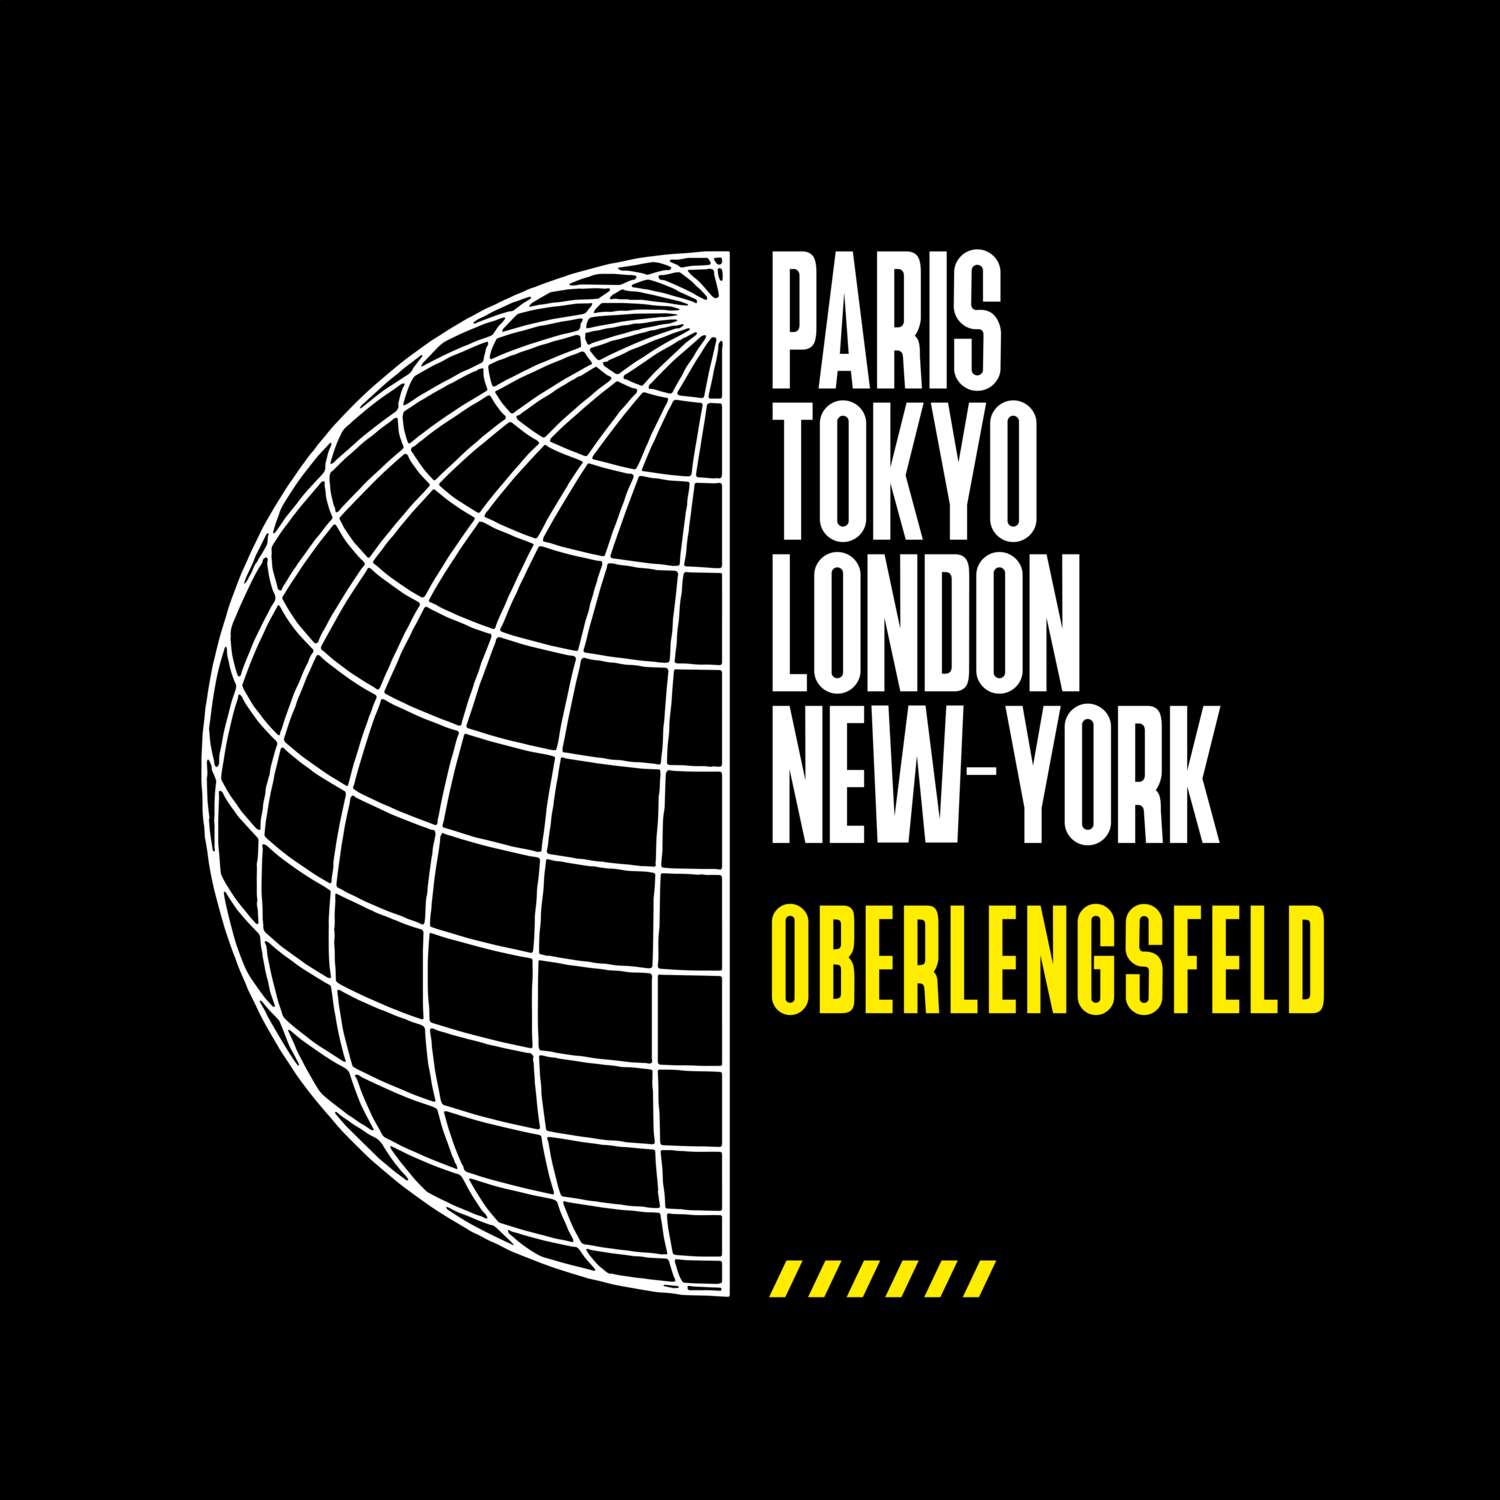 Oberlengsfeld T-Shirt »Paris Tokyo London«